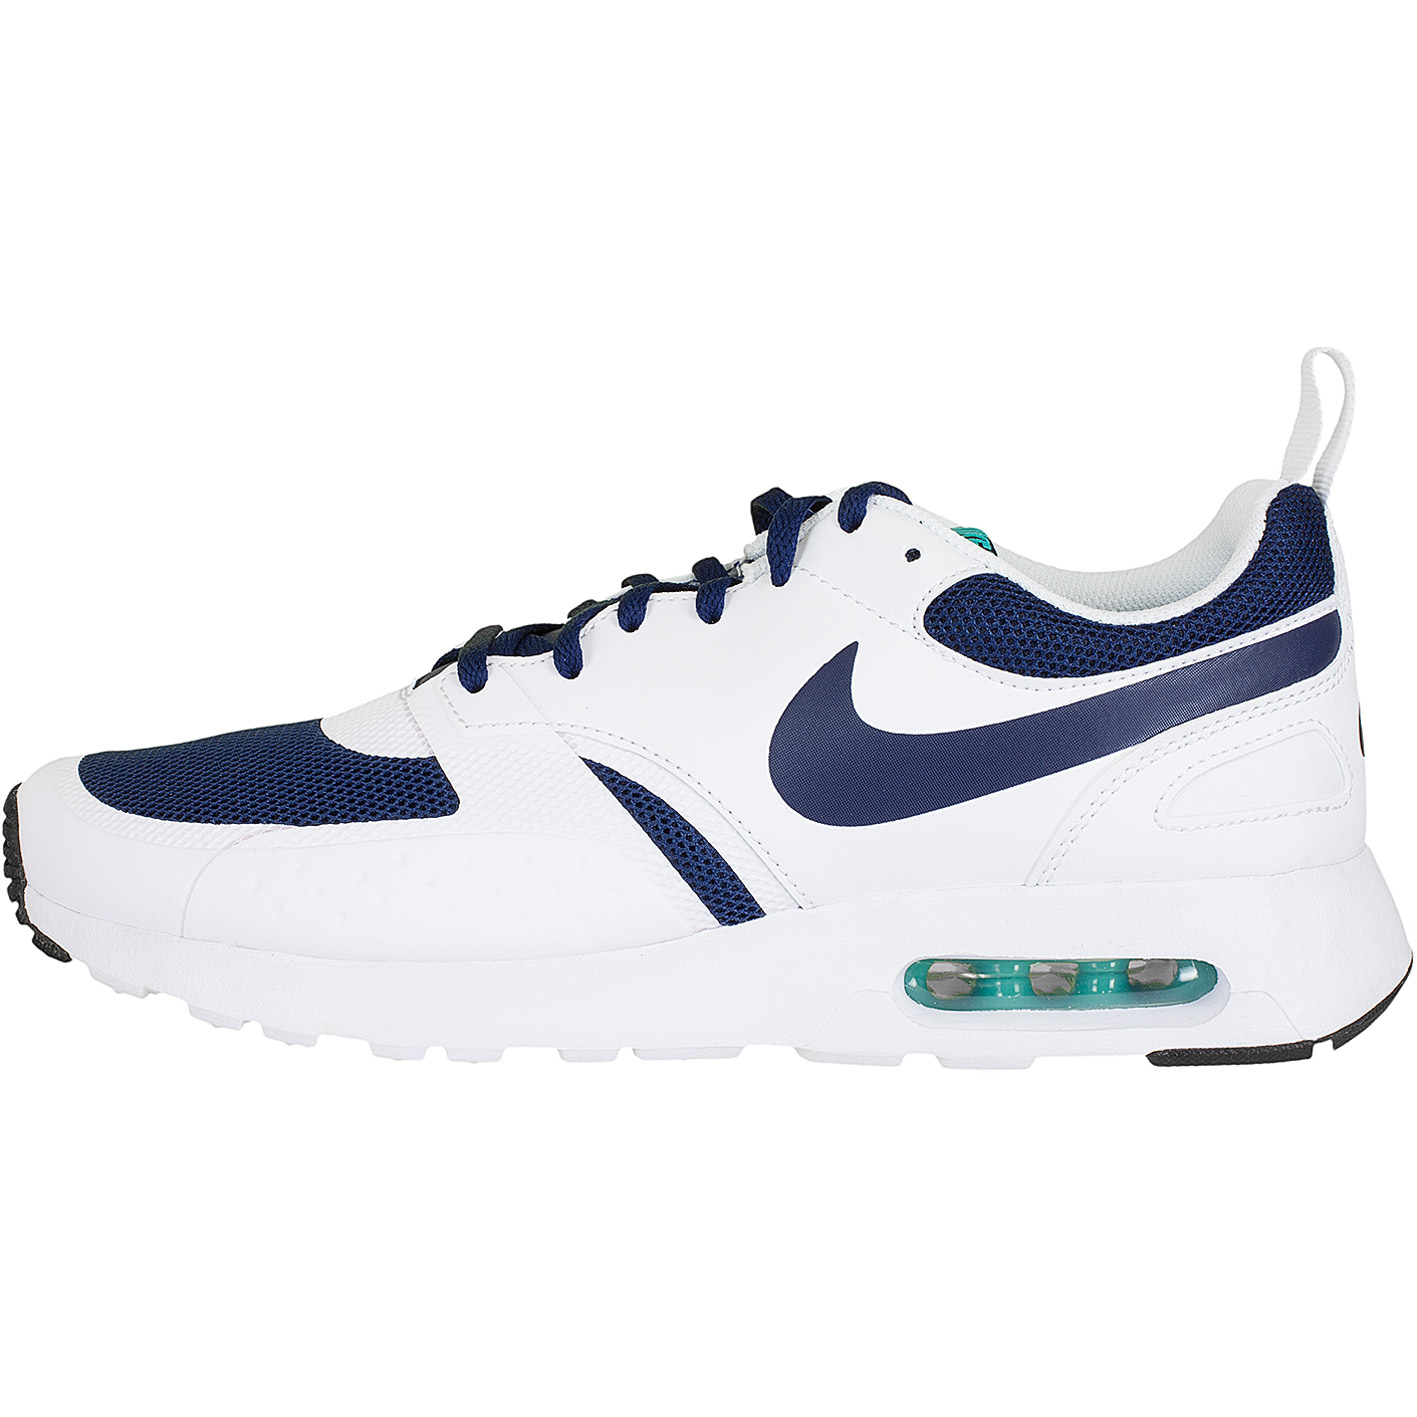 ☆ Nike Sneaker Air Max Vision dunkelblau/weiß - hier bestellen!